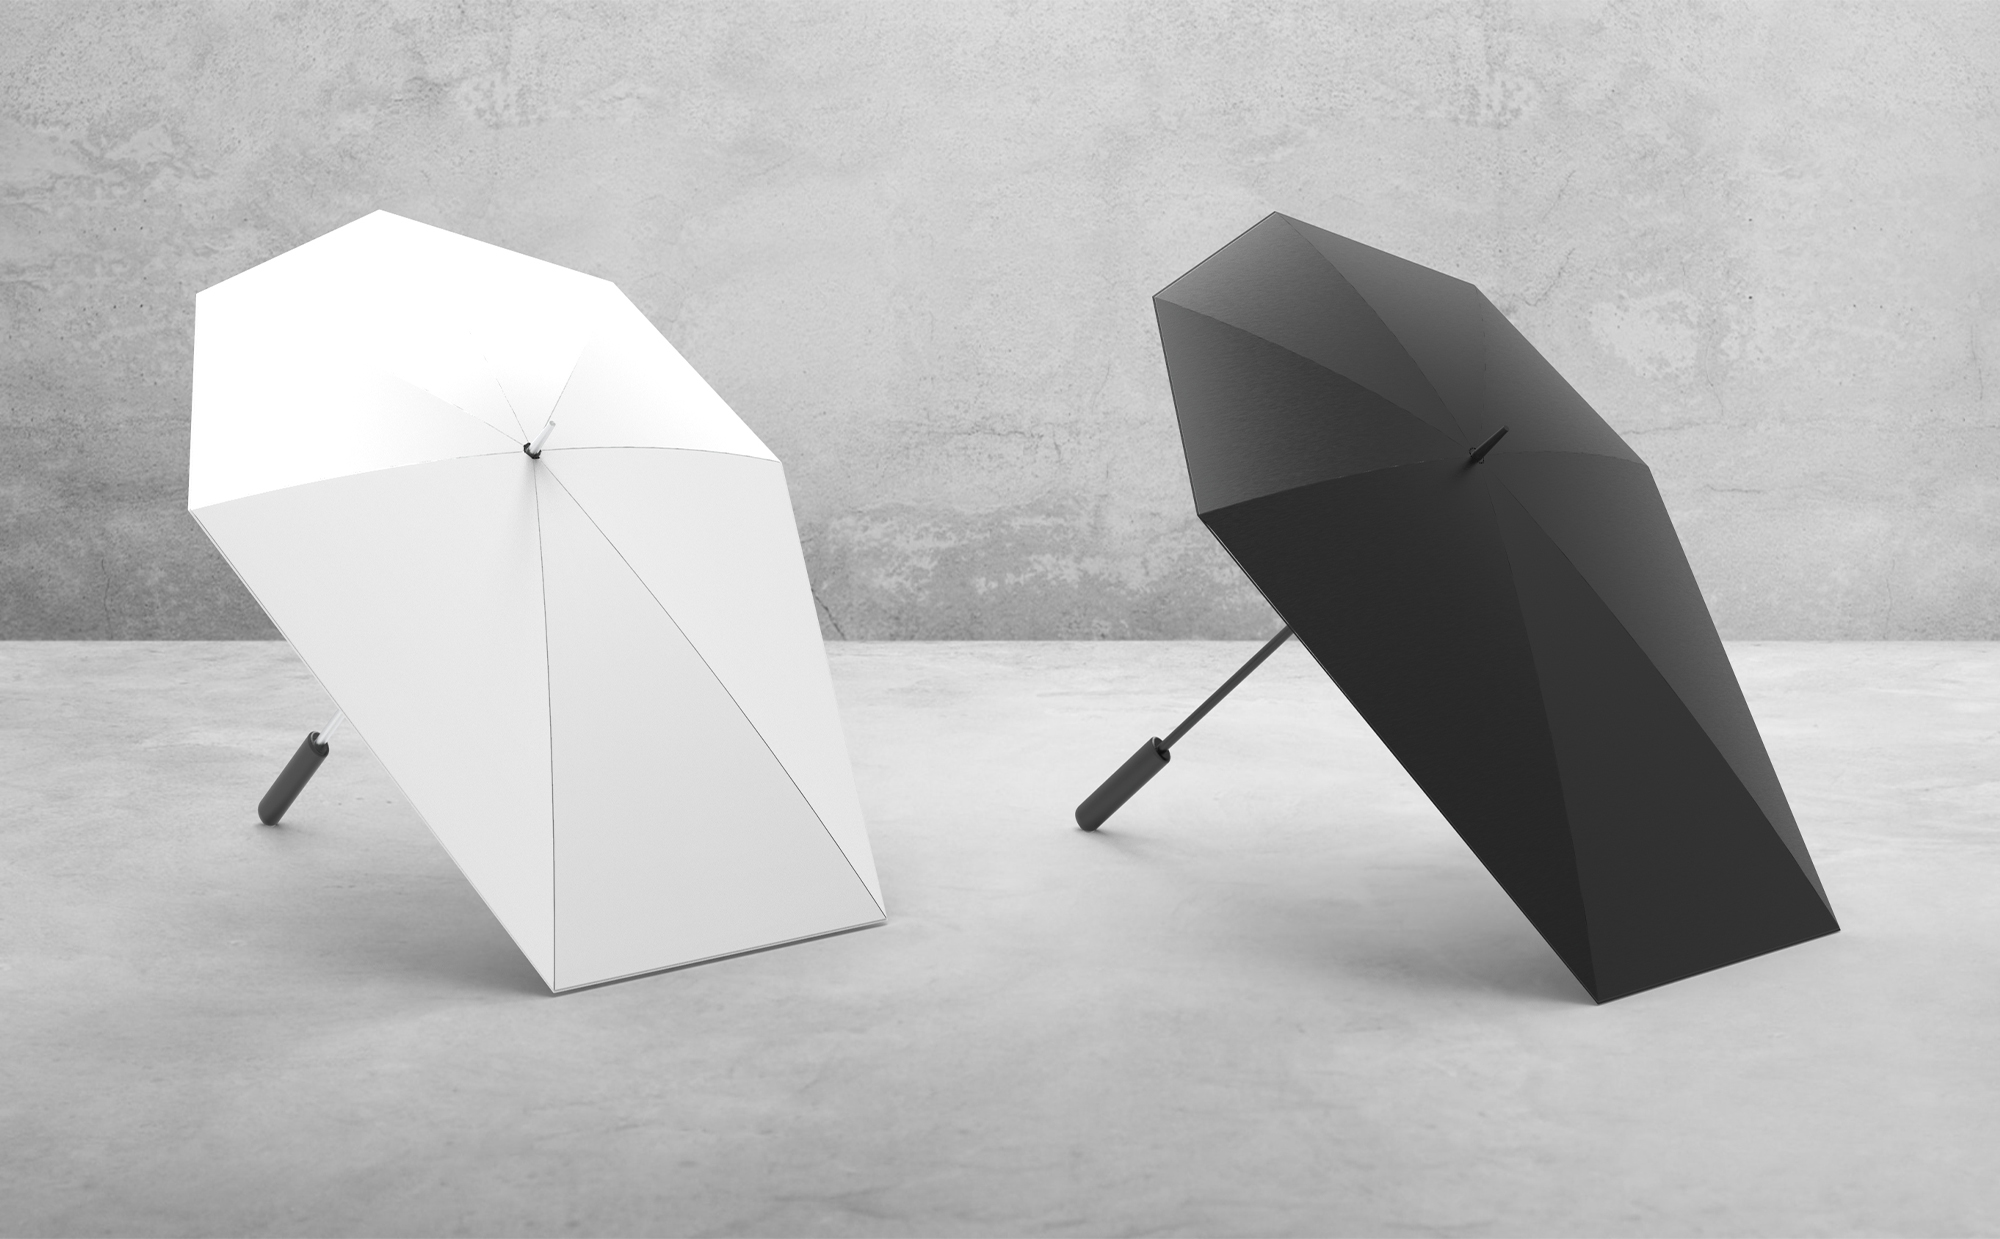 Chongsheng Zhao - Wind Proof Umbrella Project